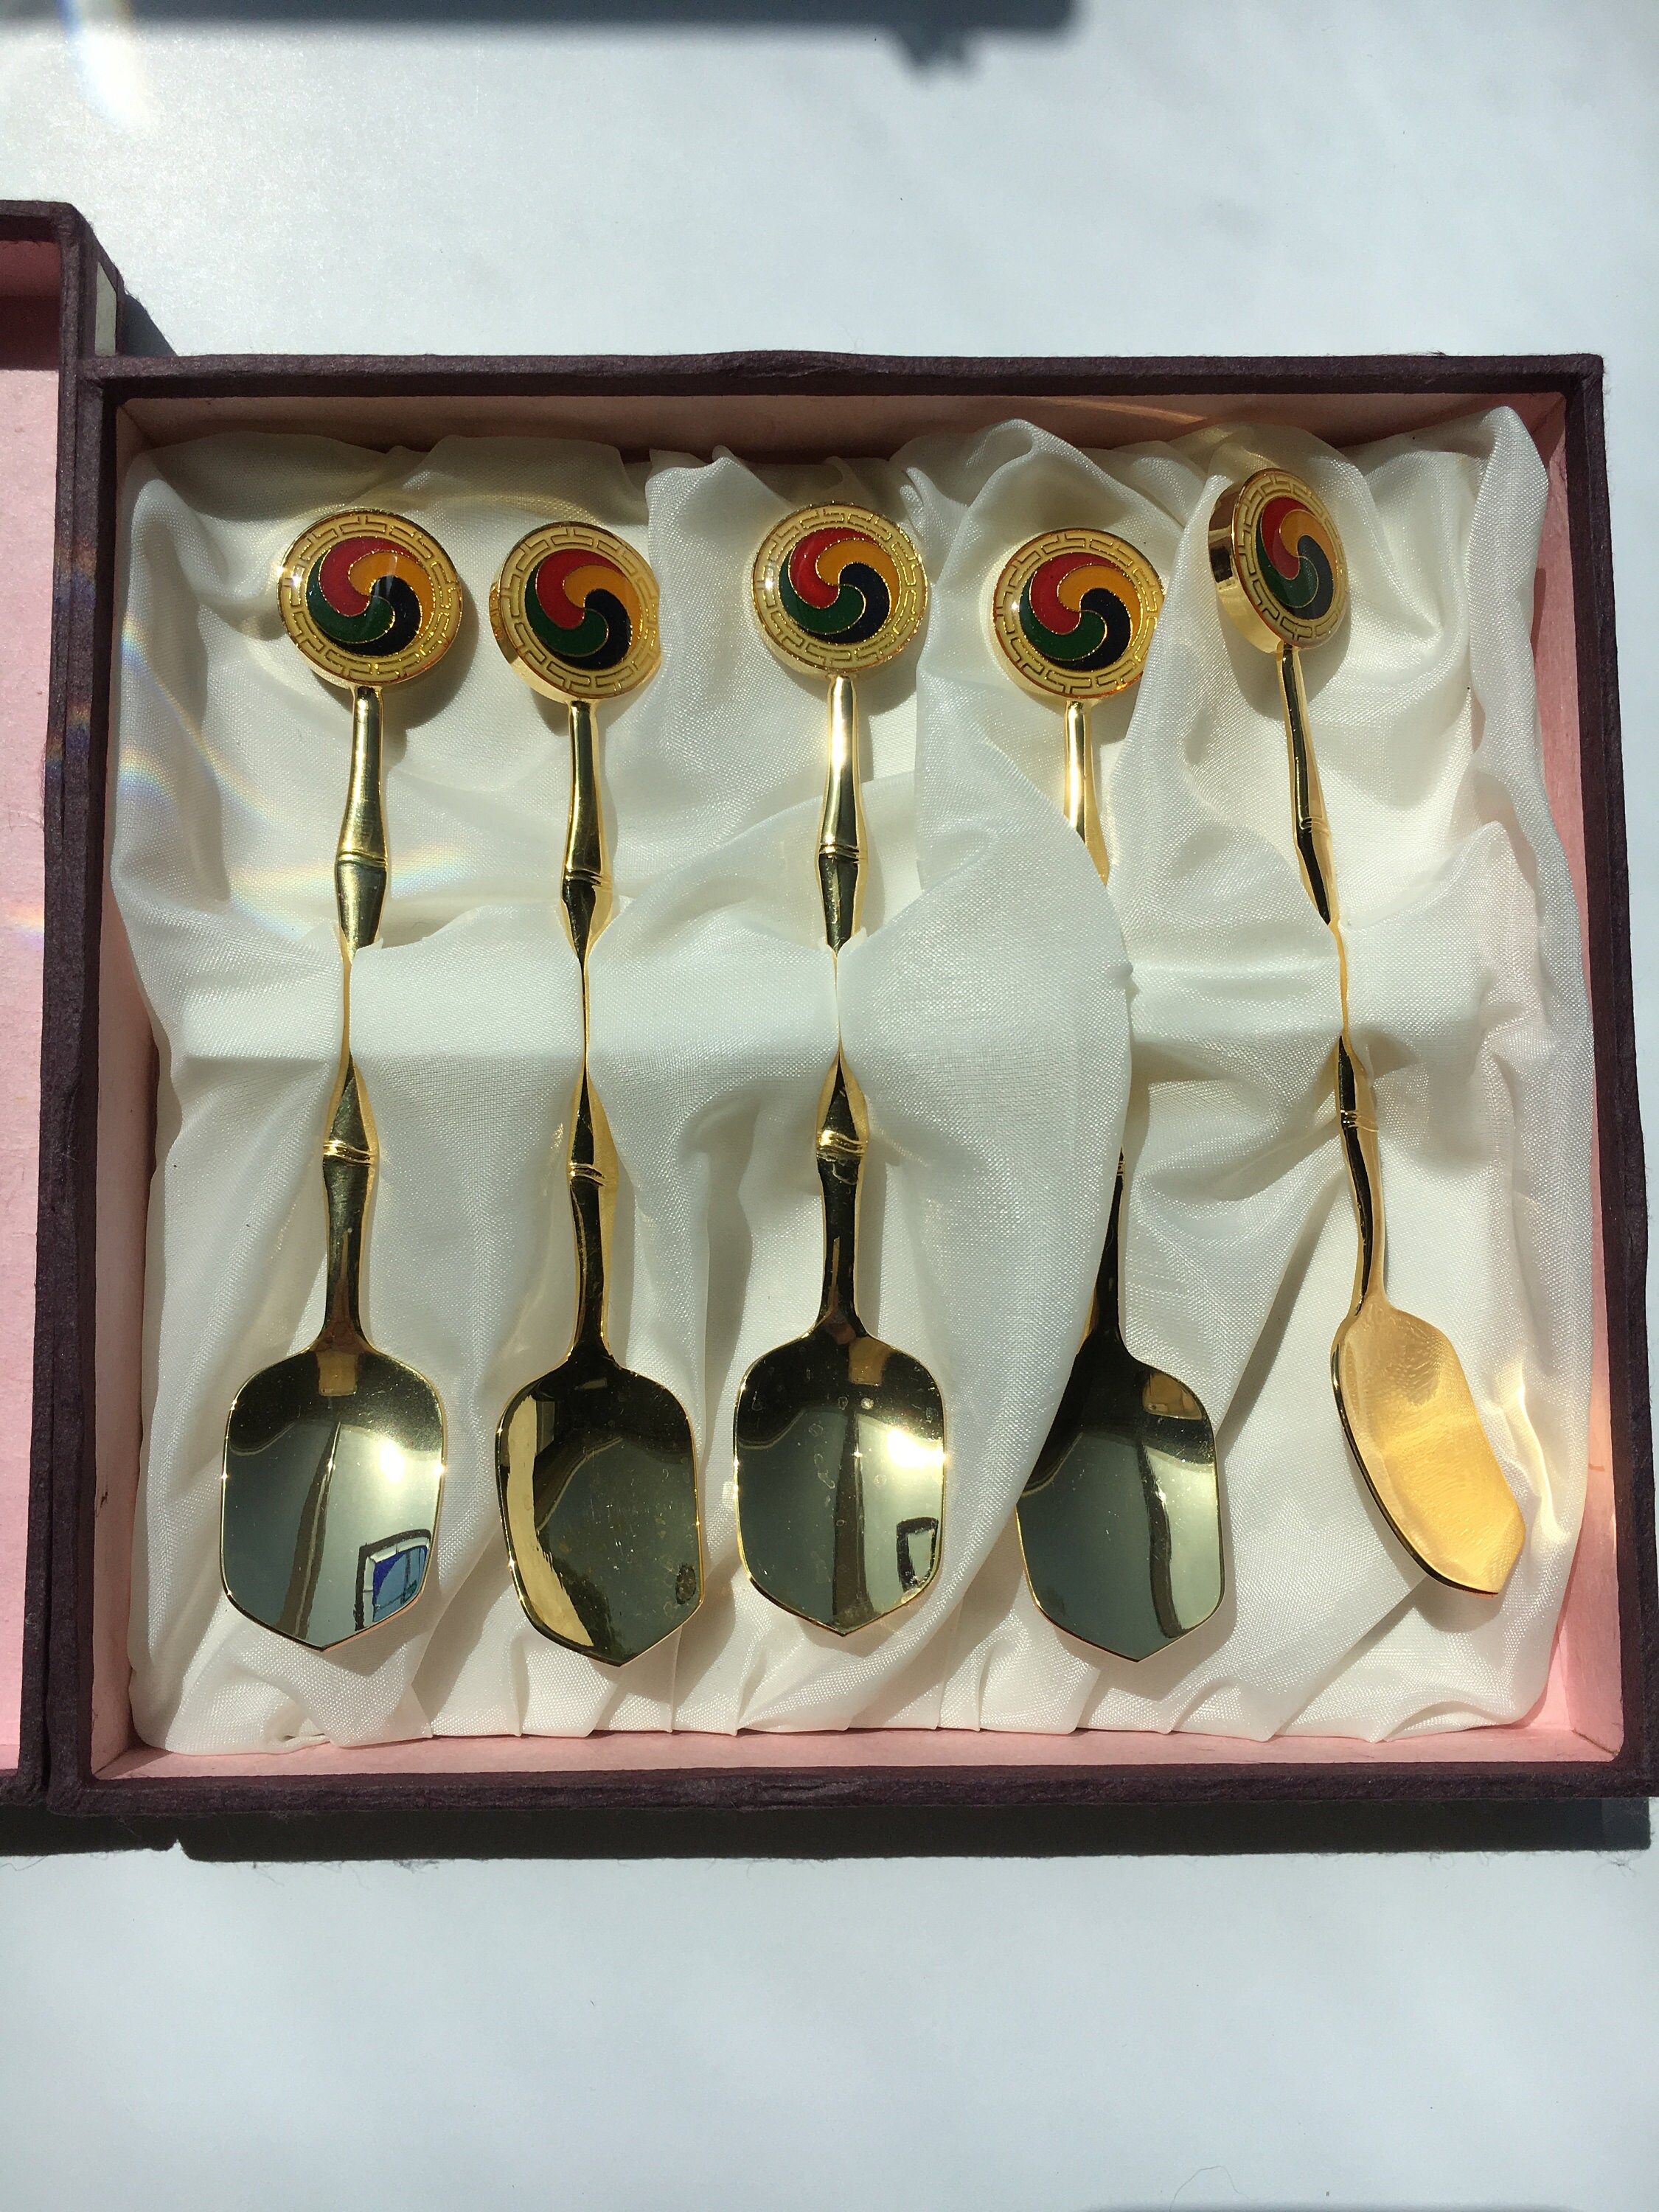 Spoon Coffee Spoon Set Vintage Table Spoon Antique Tea Spoons Coffee Royal  Style Metal Carved k Tablespoons 6 Pcs/Set 20% 